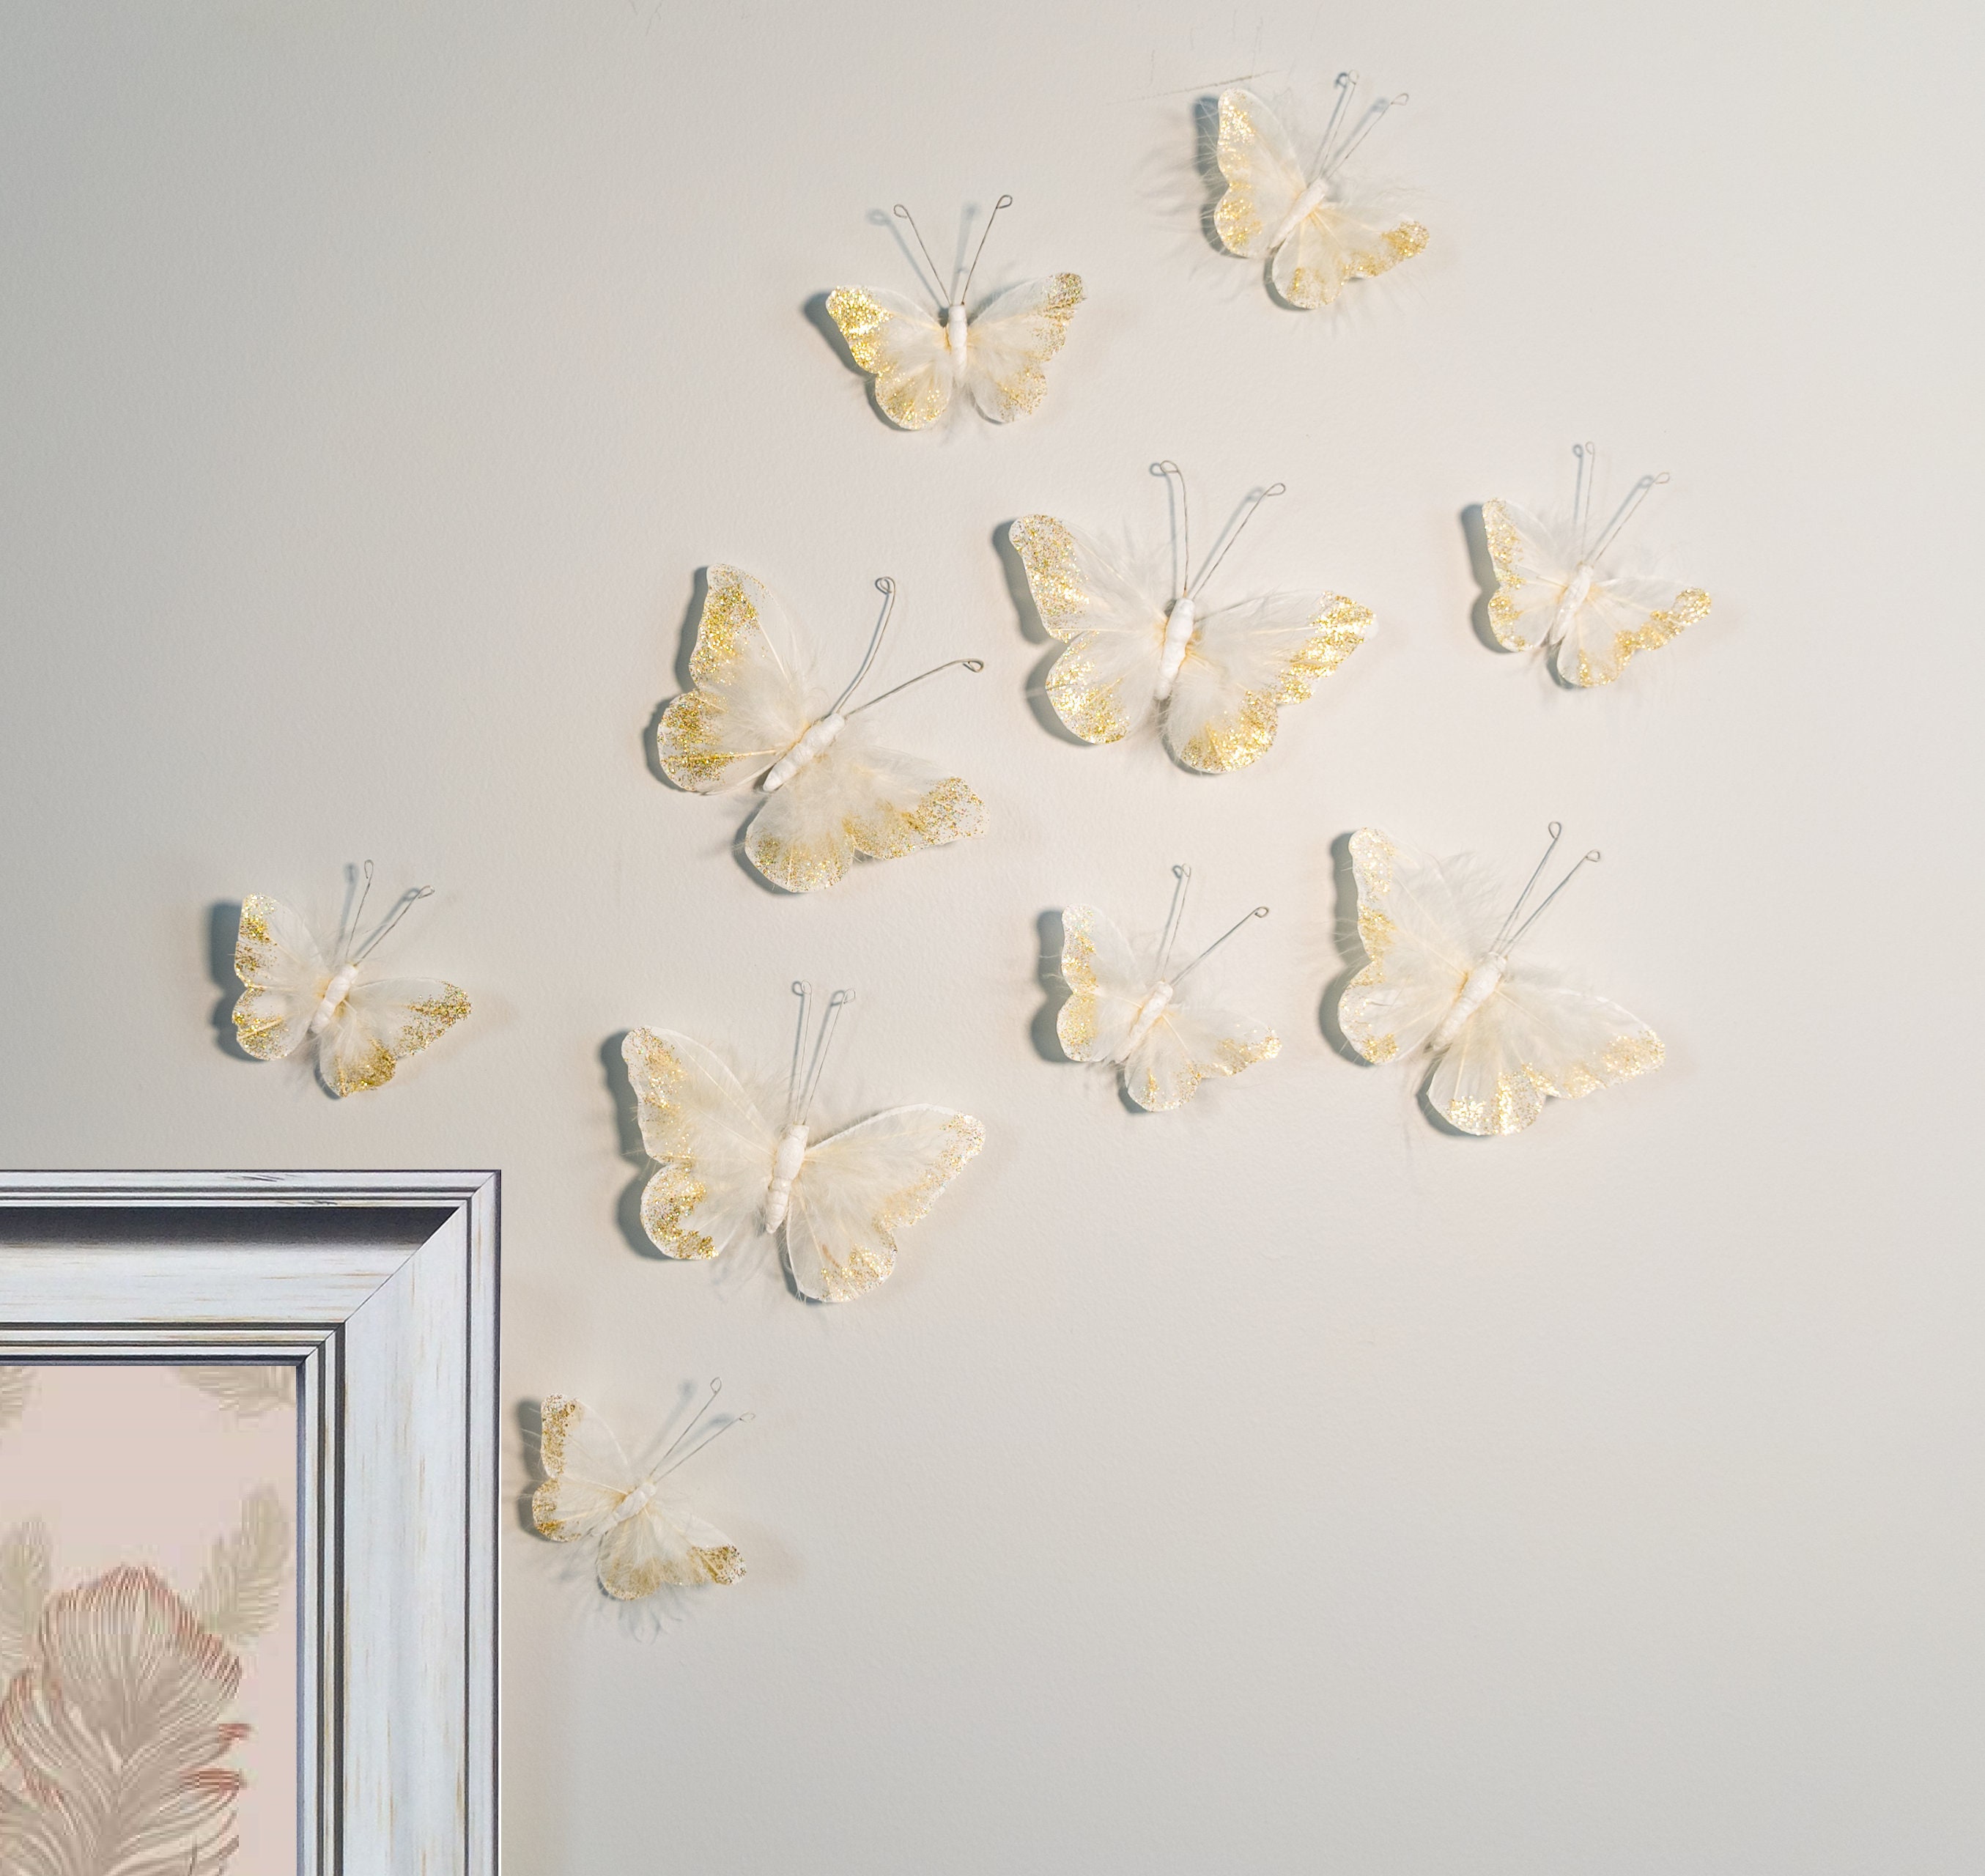 Cotyledon 36PCS Butterfly Wall Decals - 3D Butterflies Wall Stickers  Removable Mural Decor Wall Stickers Decals Wall Decor Home Decor Kids